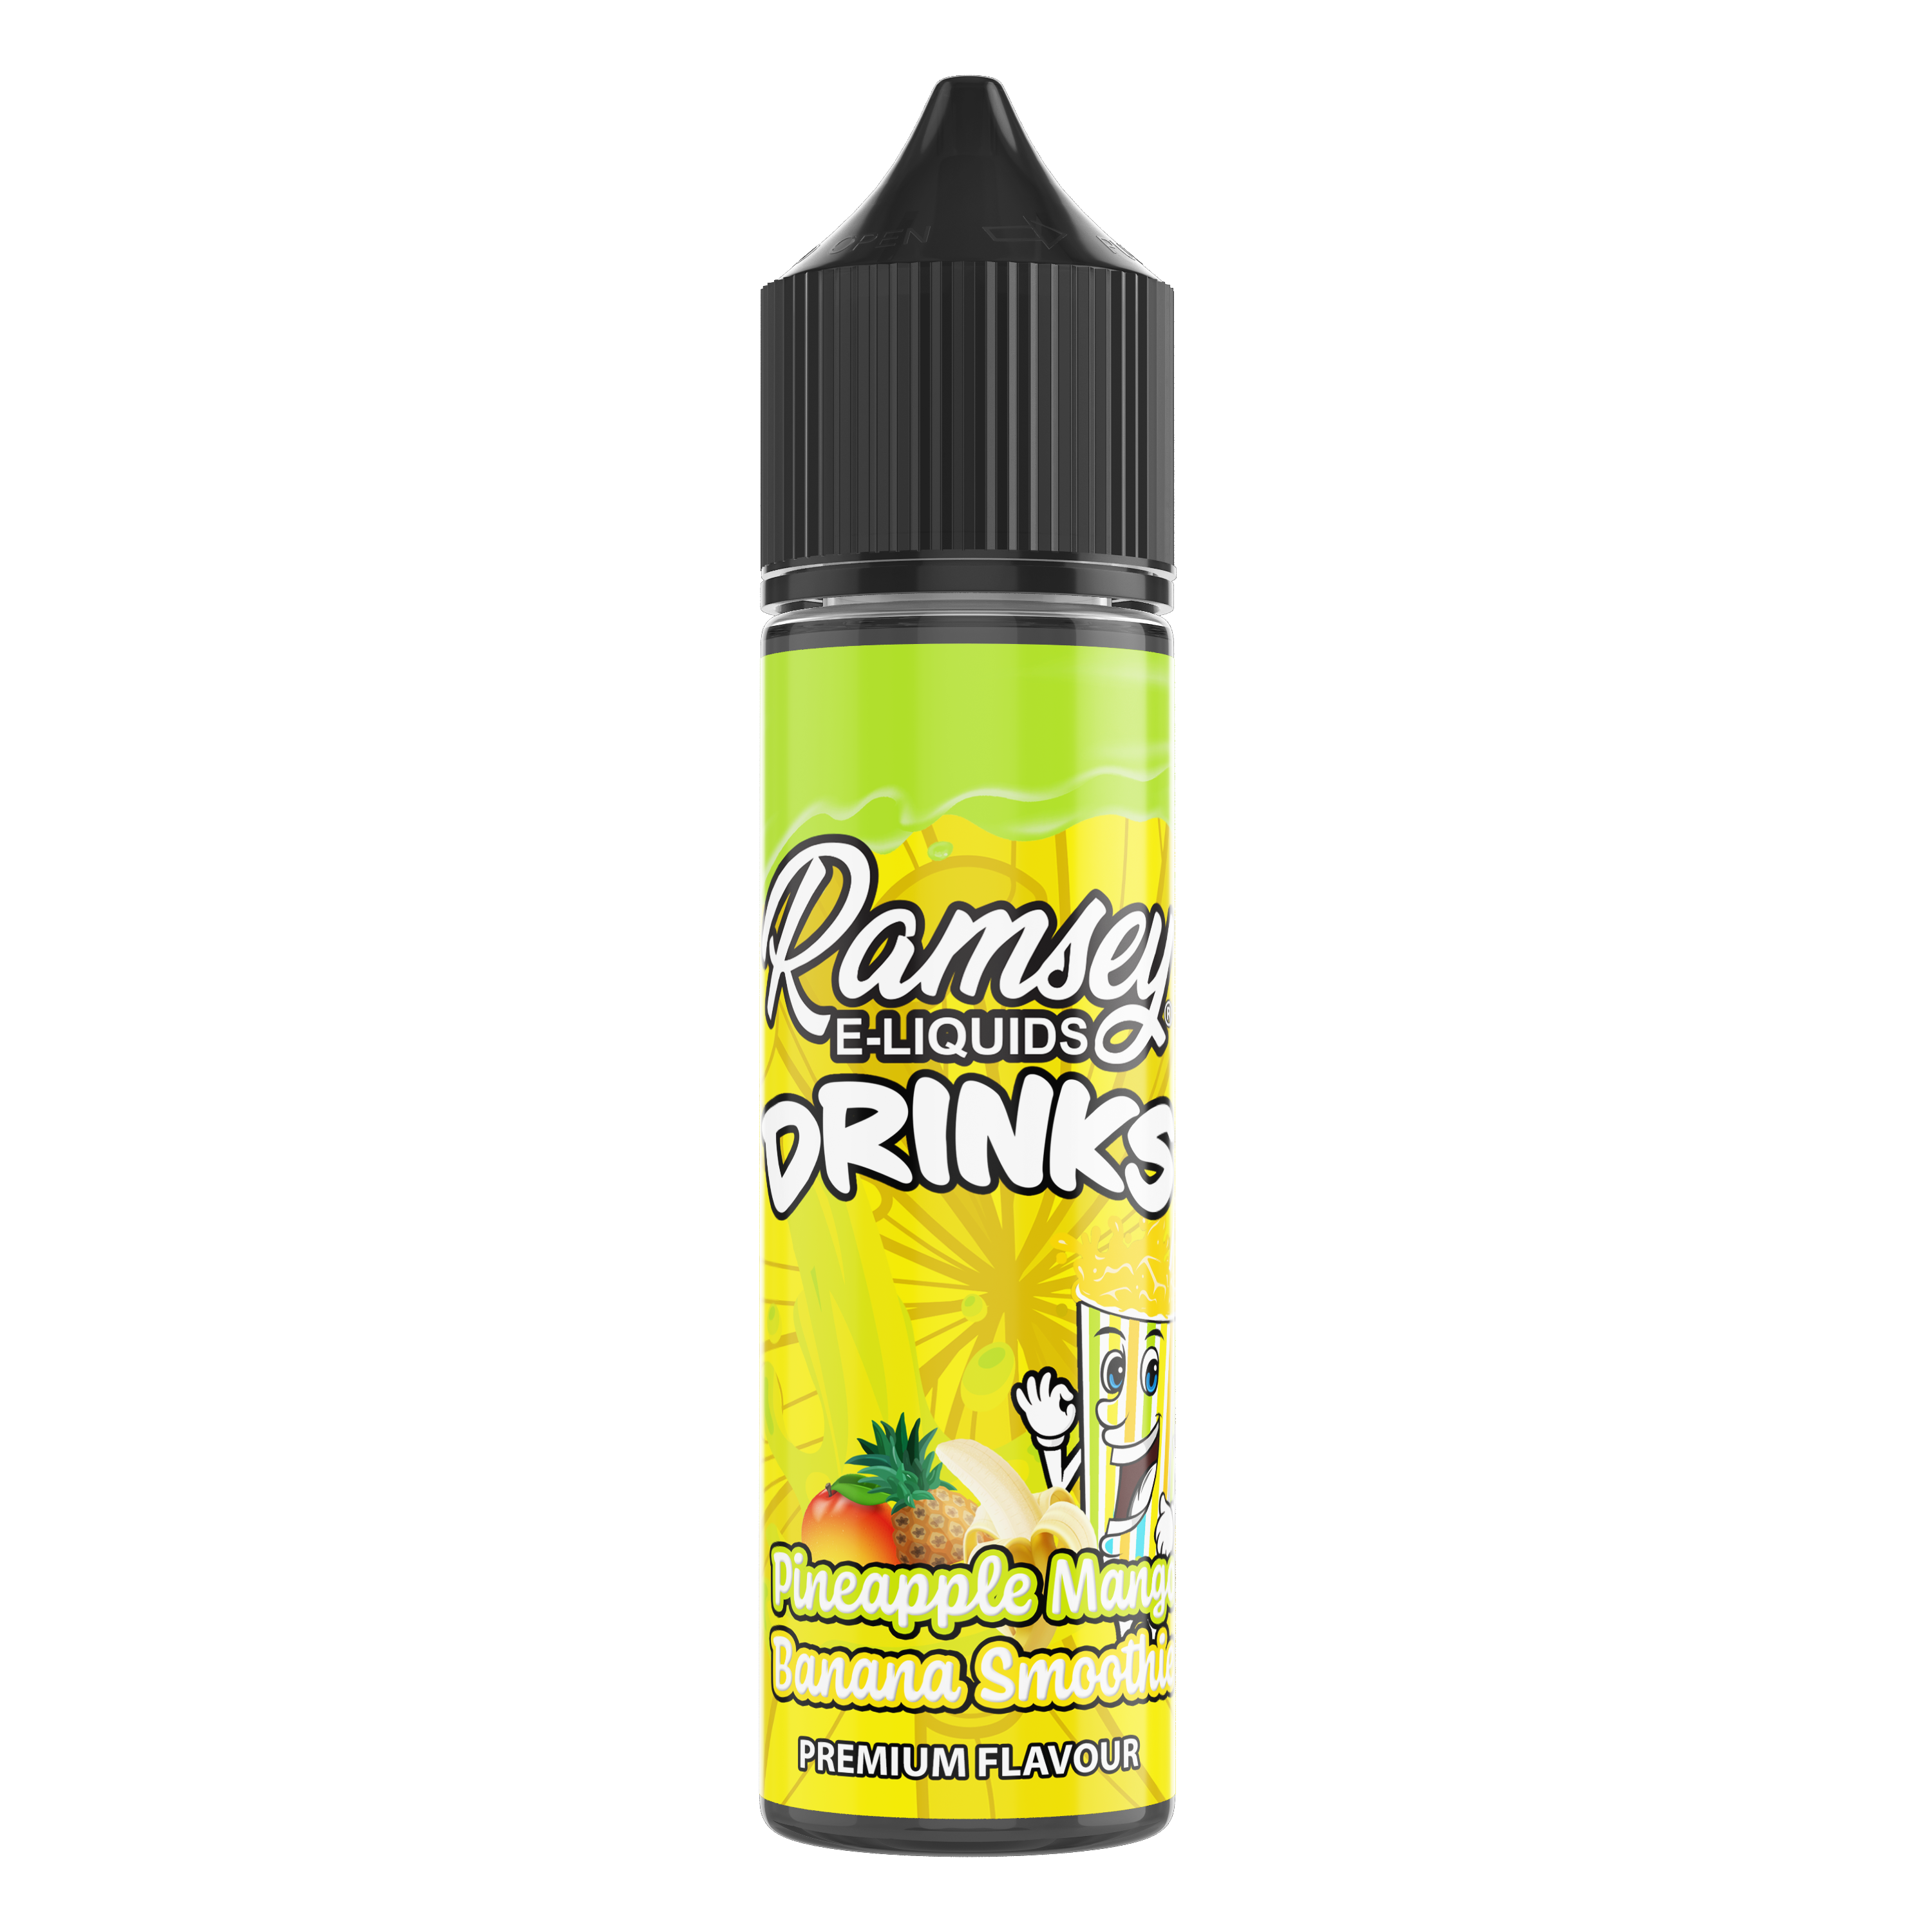 Ramsey E-Liquids Drinks Pineapple Mango Banana Smoothie 50ml Shortfill